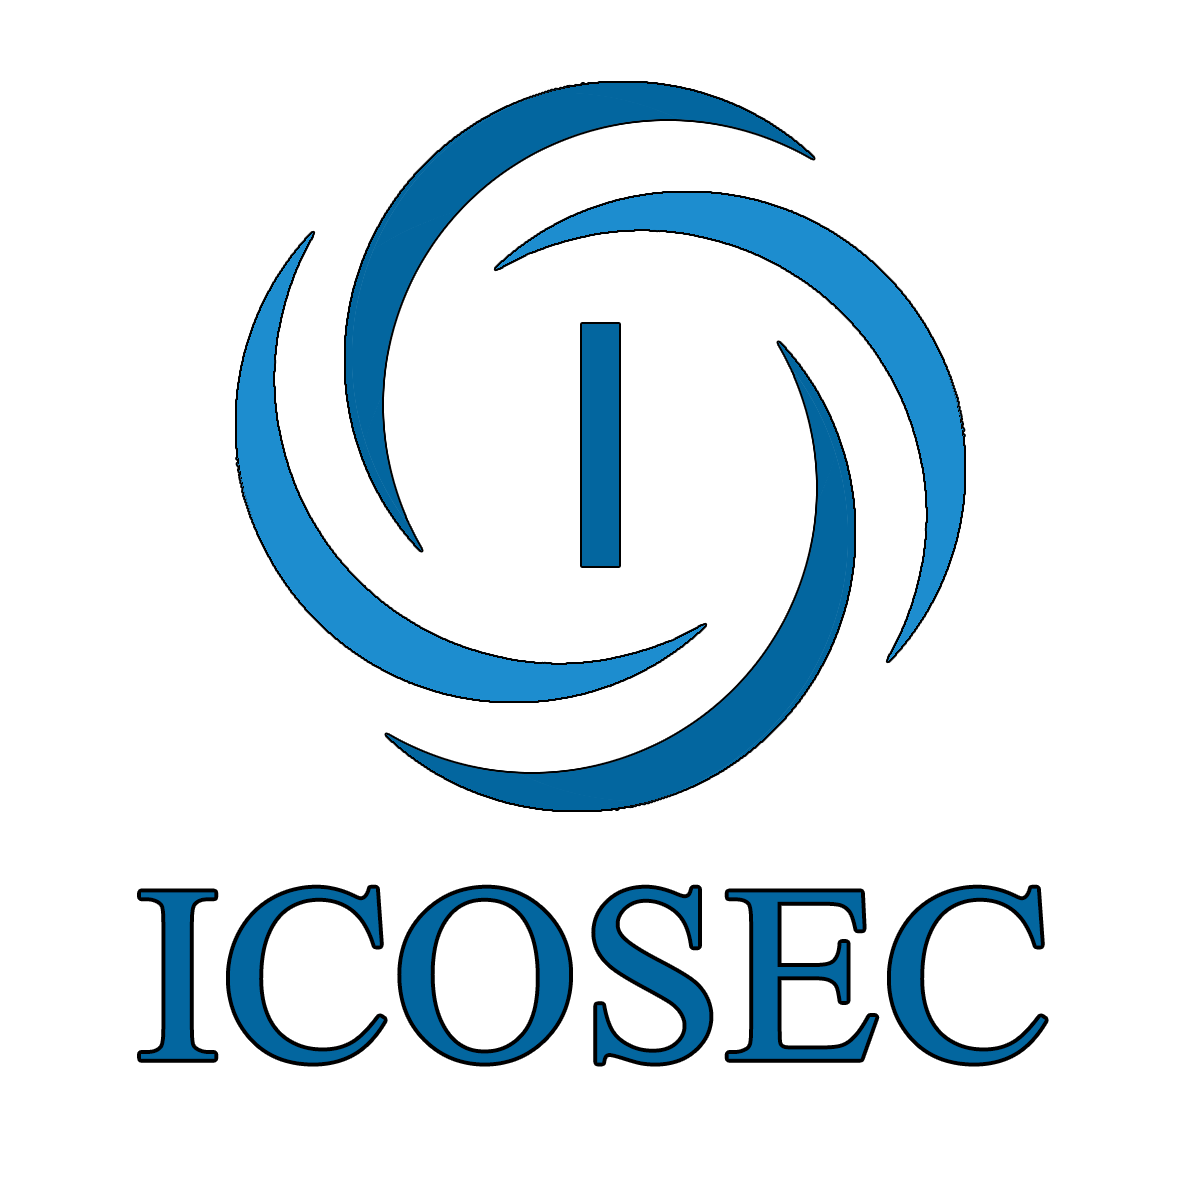 ICOSEC logo